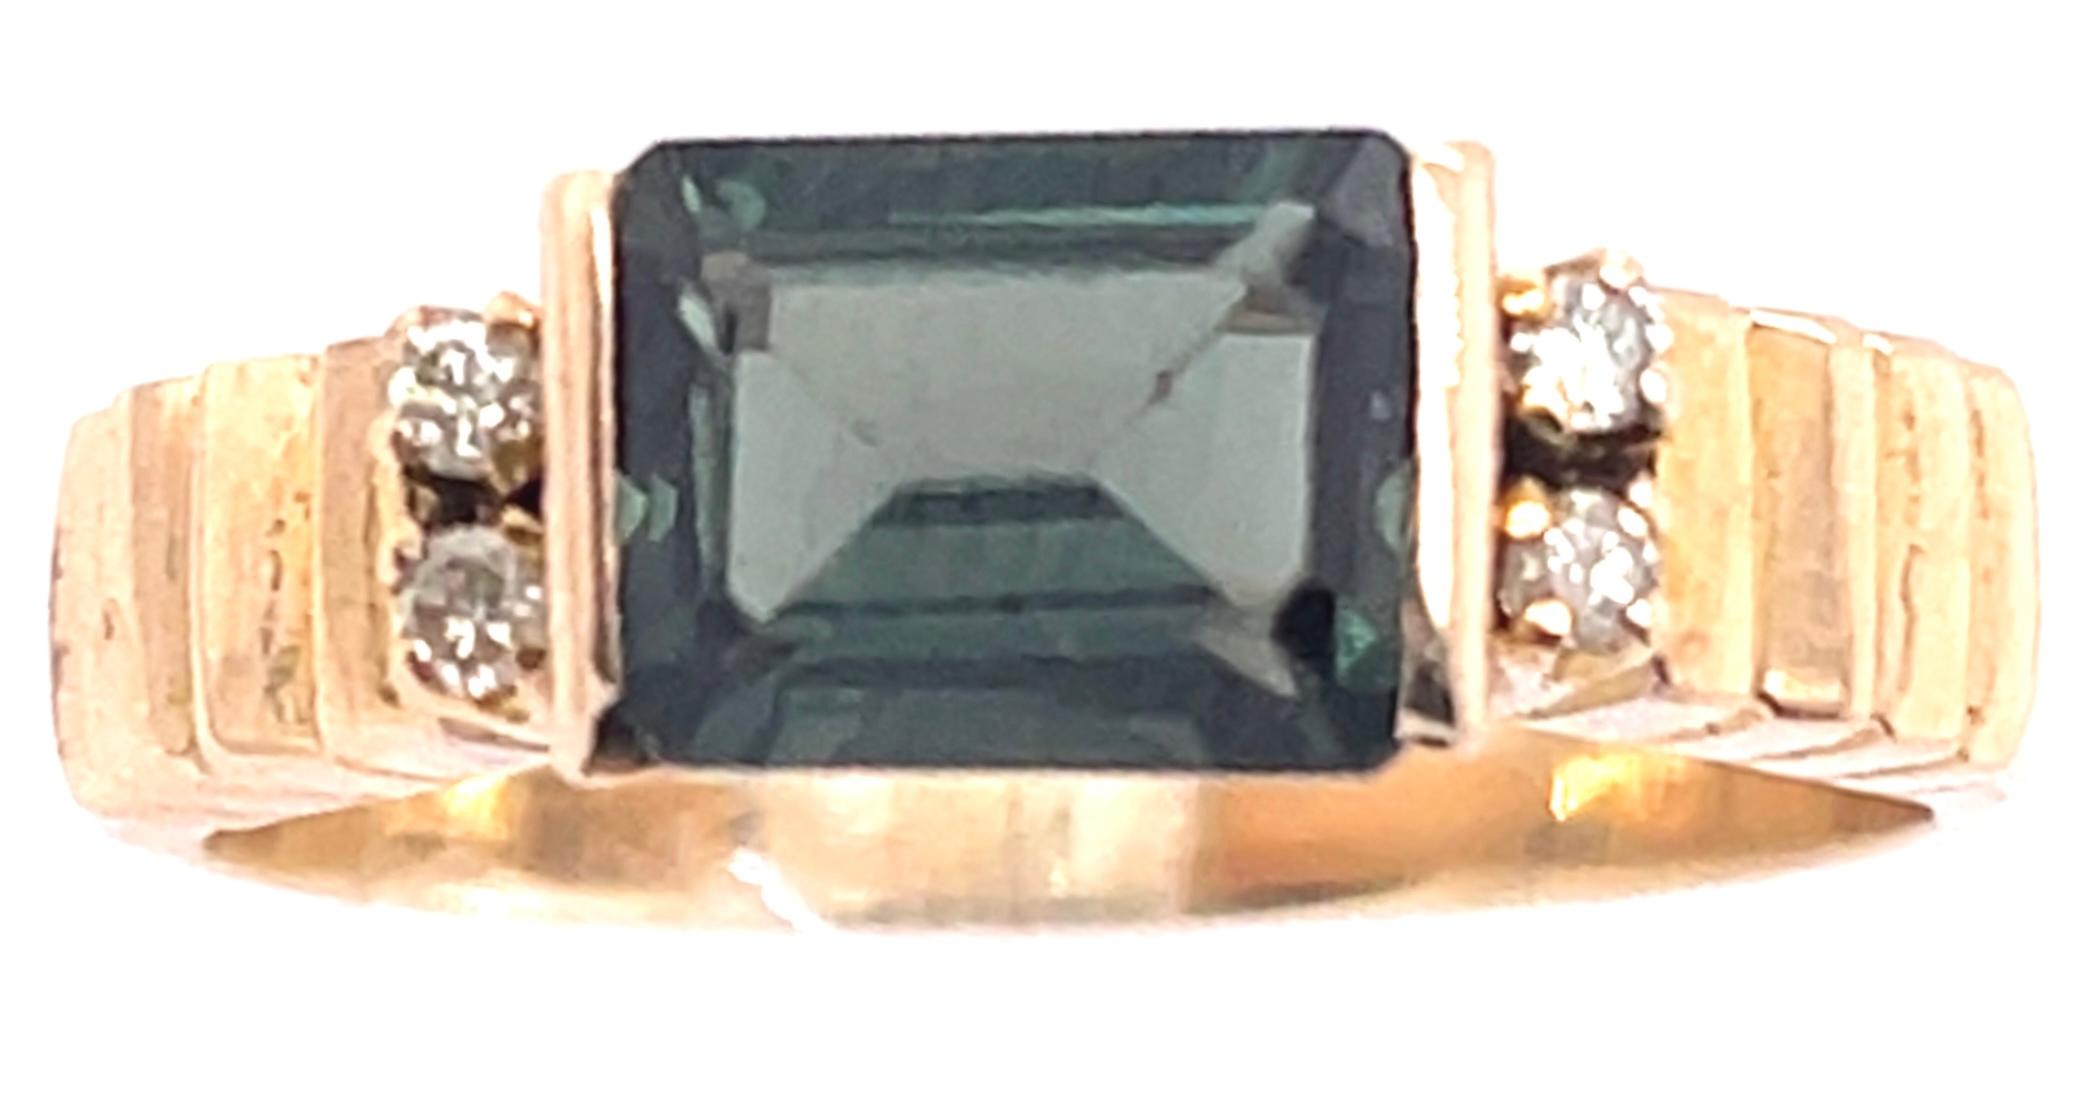 14 Karat Yellow Gold Ring With Center Emerald Cut Peridot And Diamonds.
Size 7
4 round diamonds 0.08 total diamond weight.
8.00 x 6.00 mm U TO.
5 grams total weight.